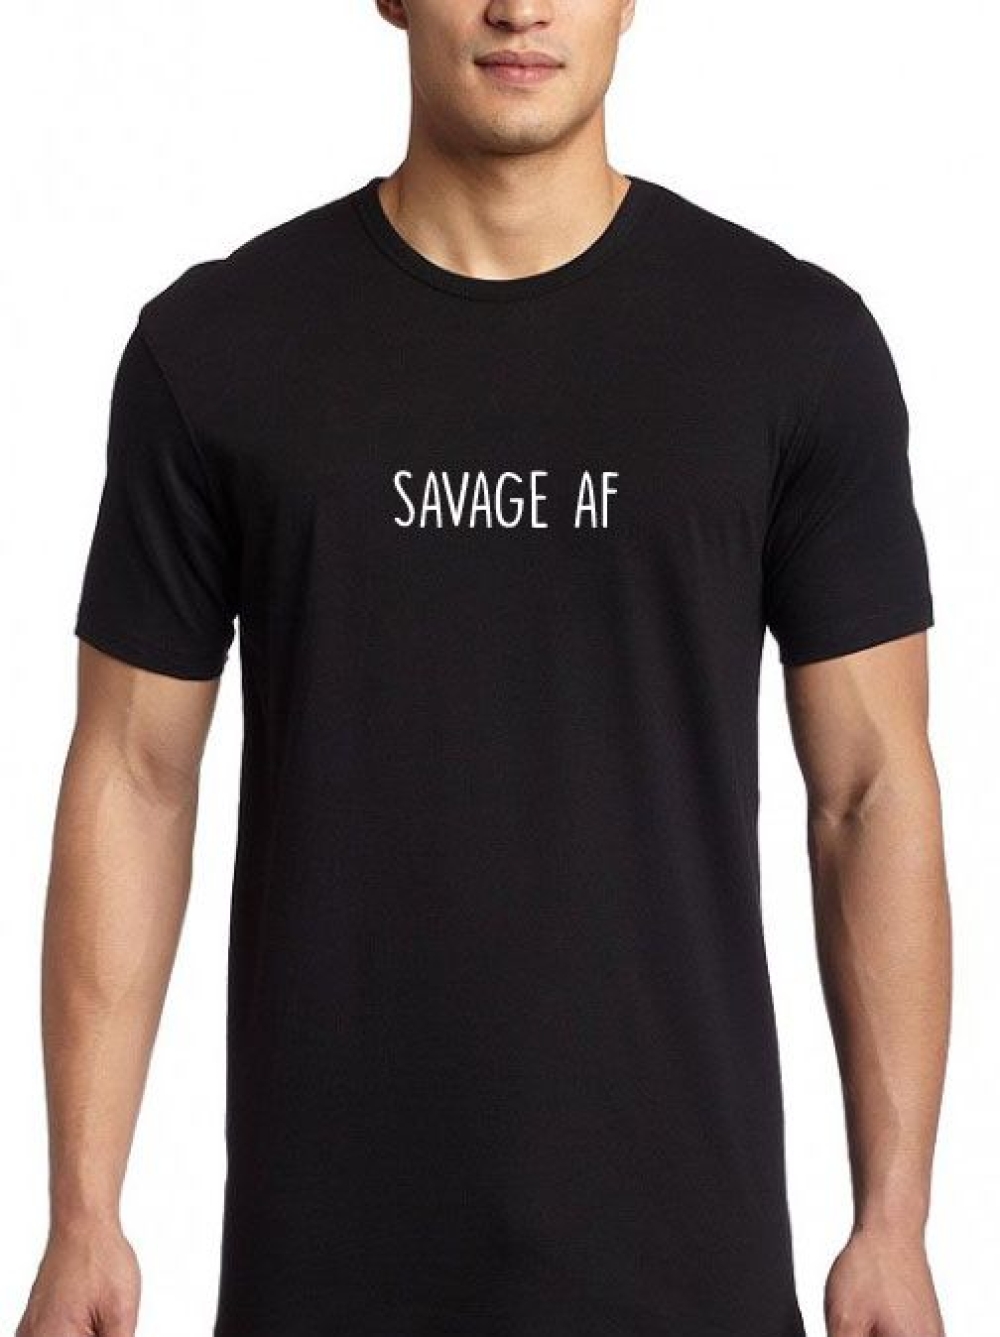 Savage Af T shirt Adult Unisex men and women size S-XL